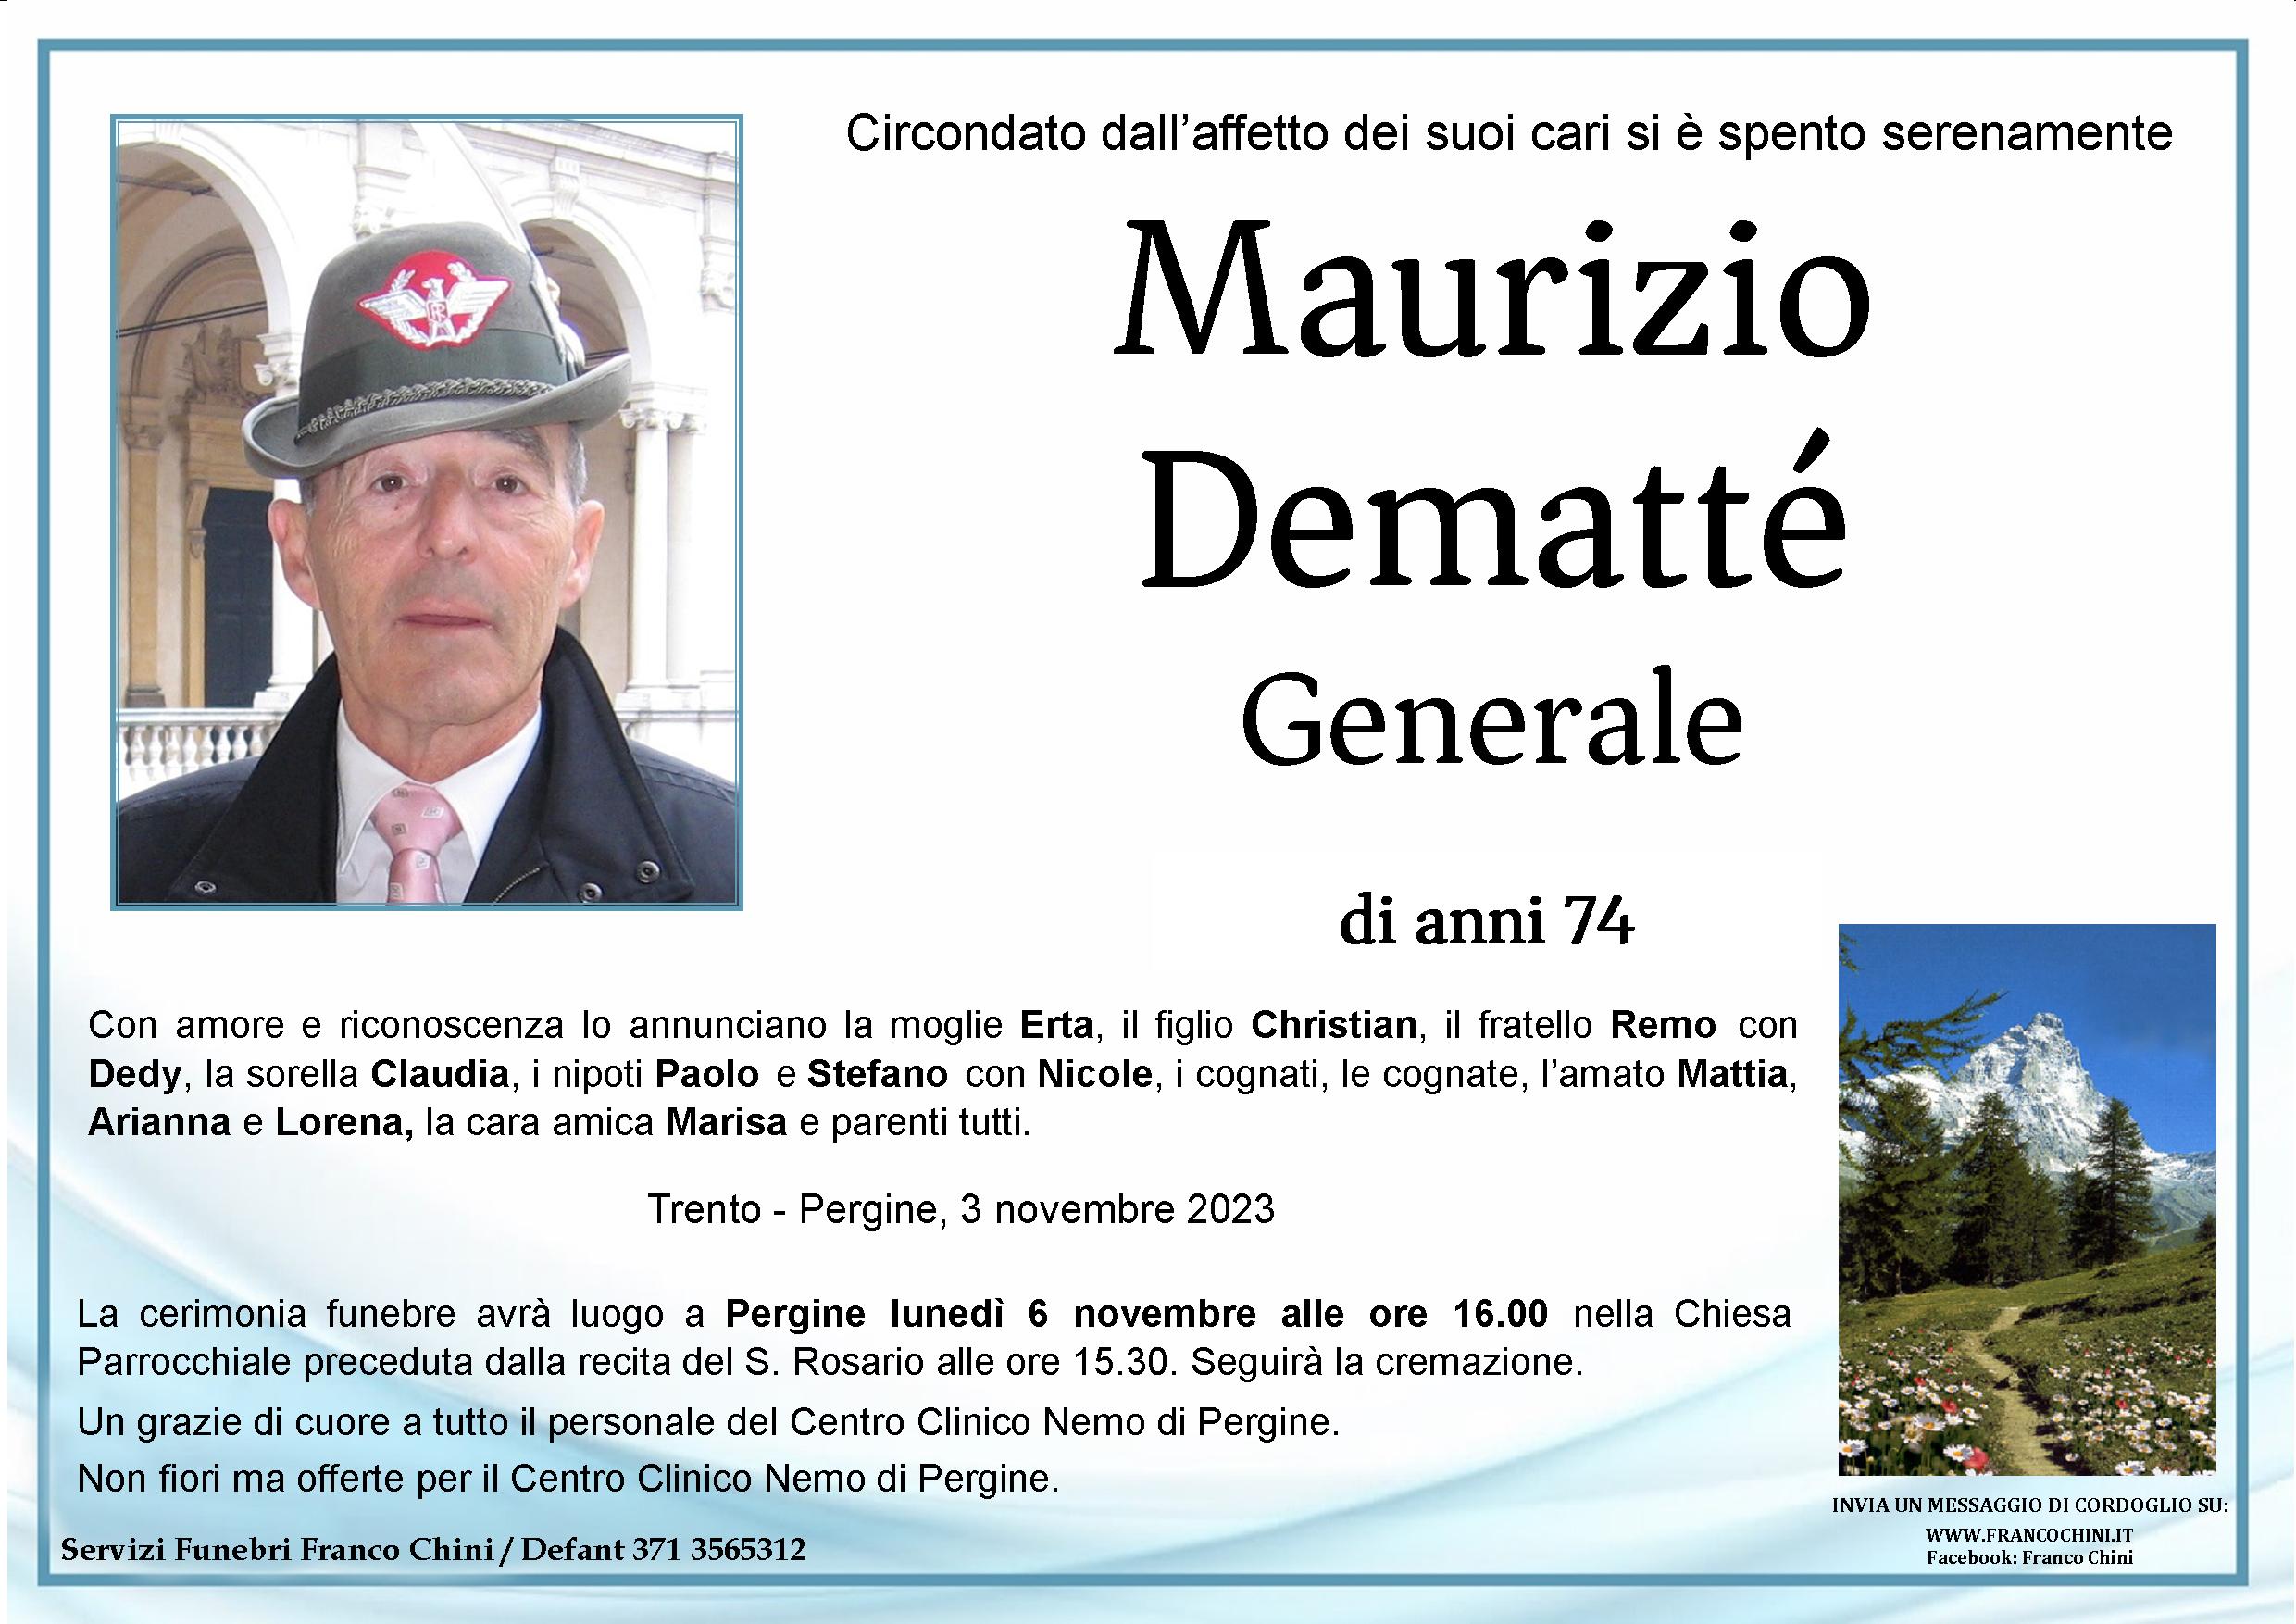 Maurizio Dematté